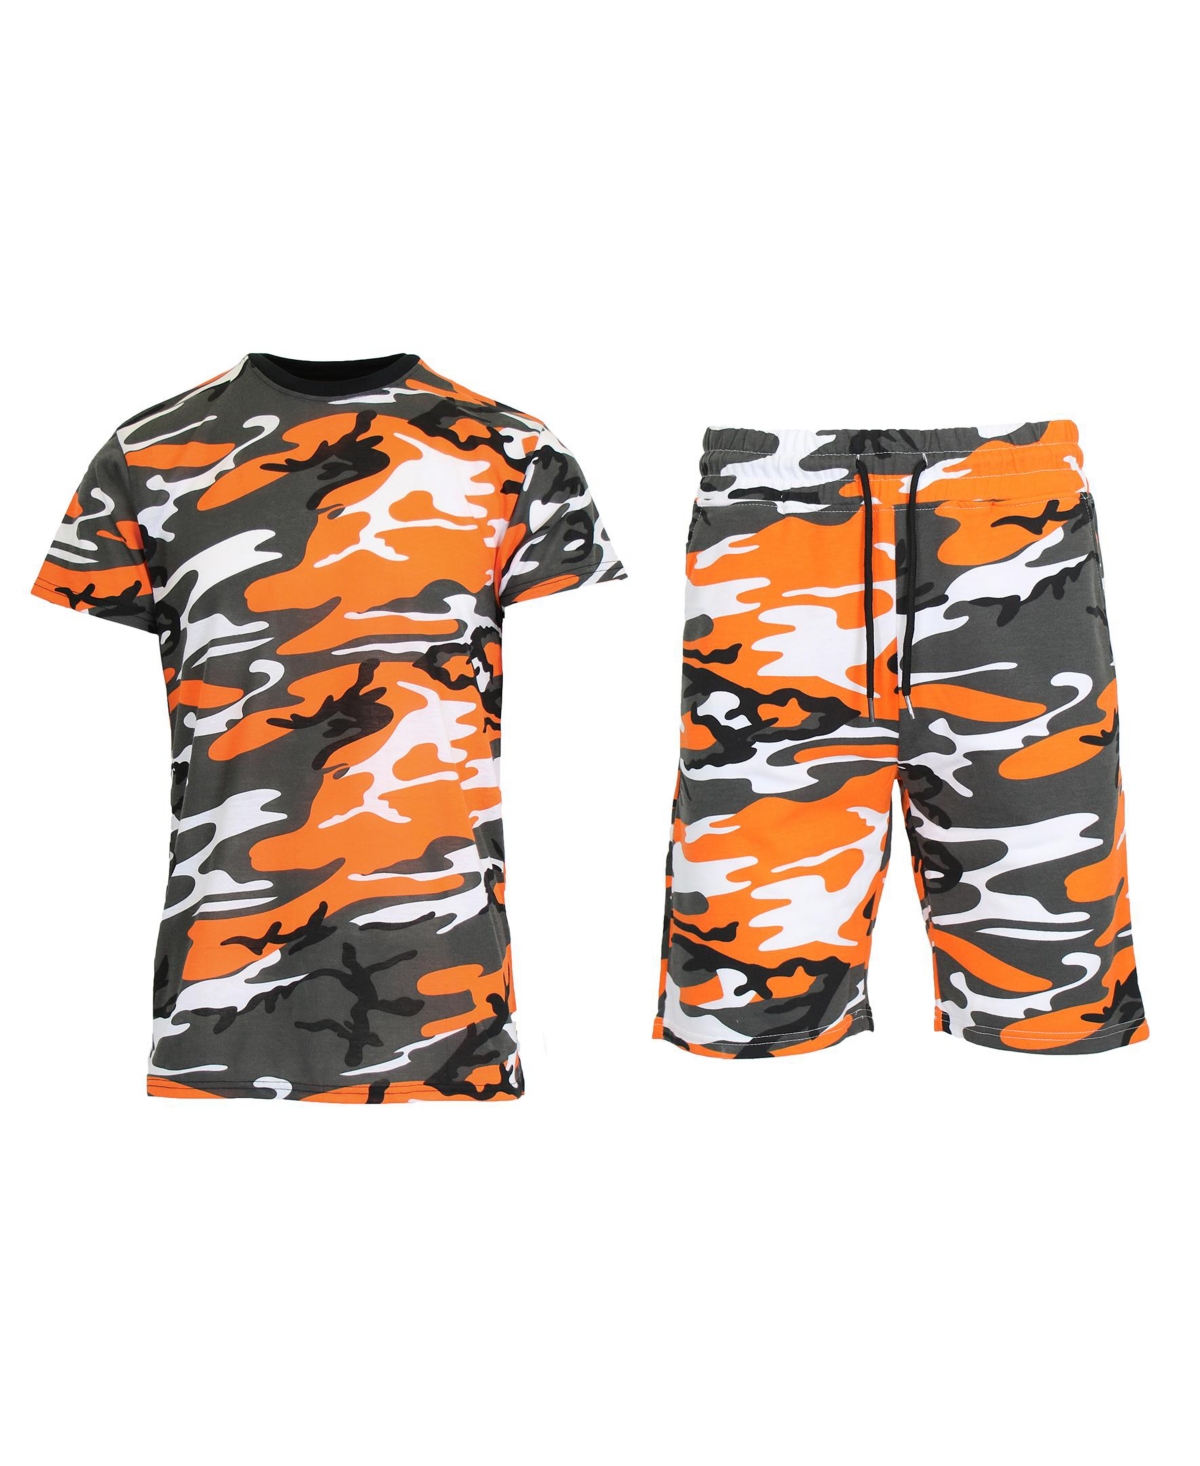 Men's Camo Short Sleeve T-shirt and Shorts, 2-Piece Set - Mint Camo